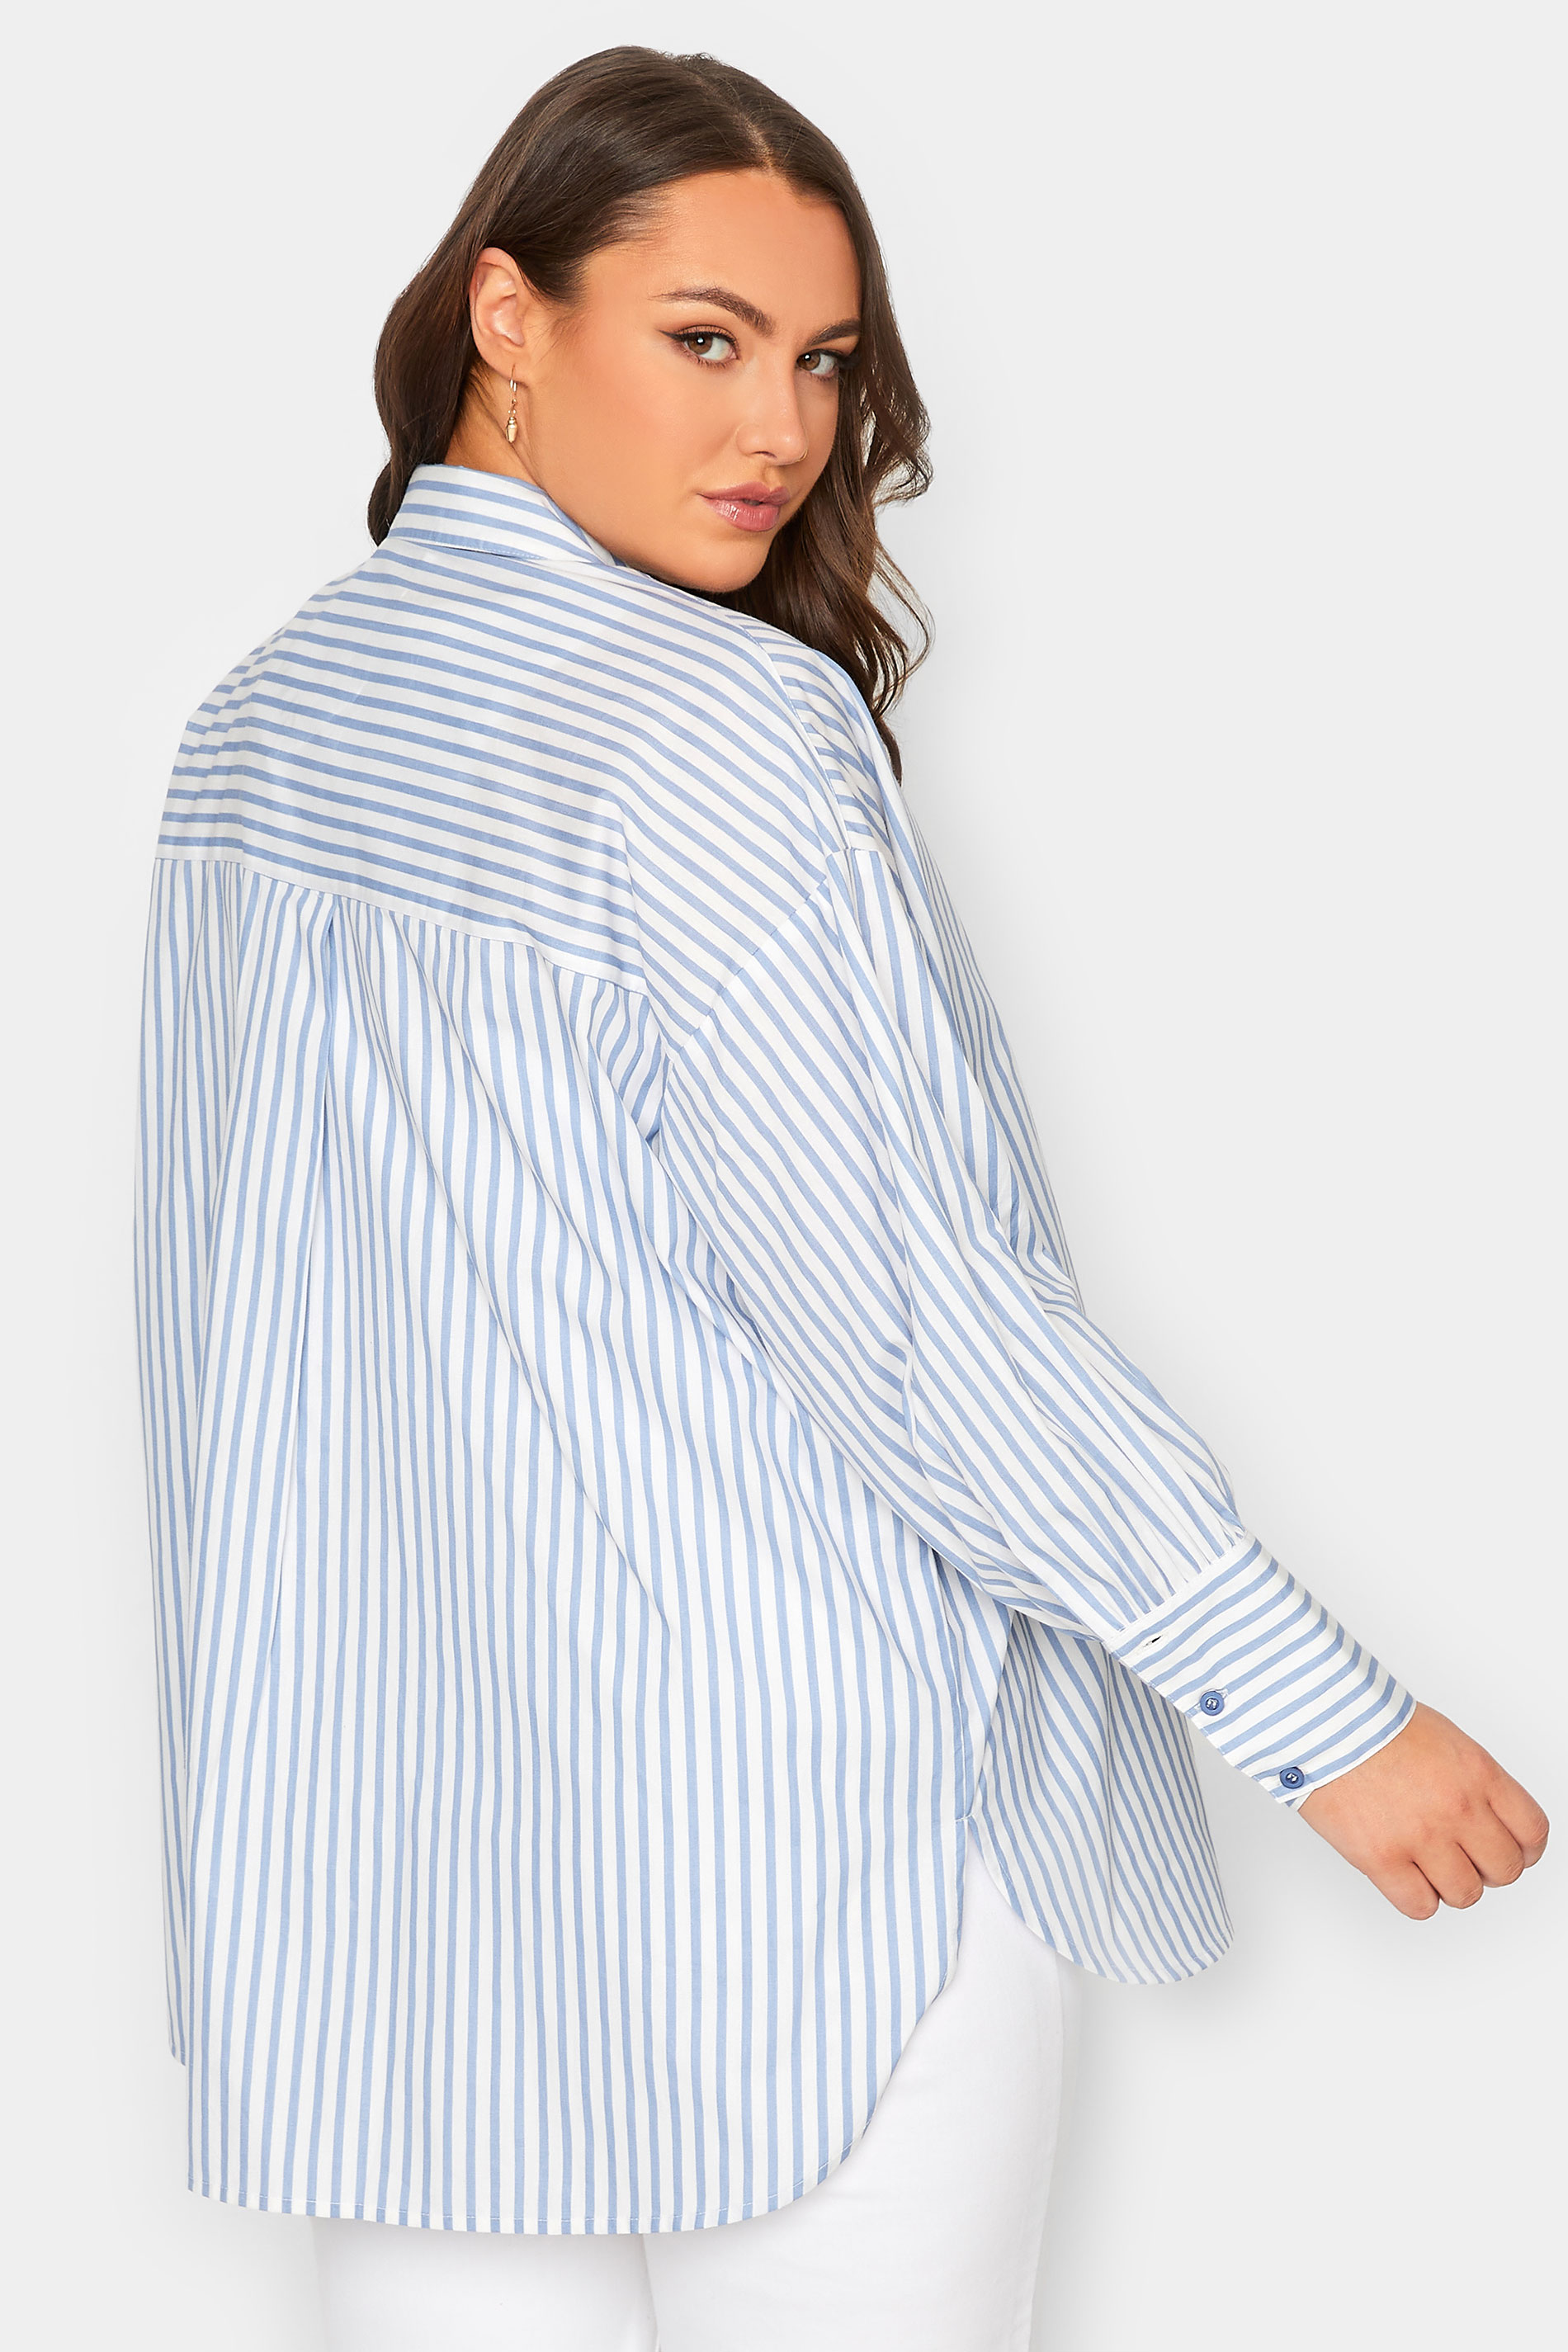 YOURS Plus Size Blue & White Stripe Oversized Shirt | Yours Clothing  3